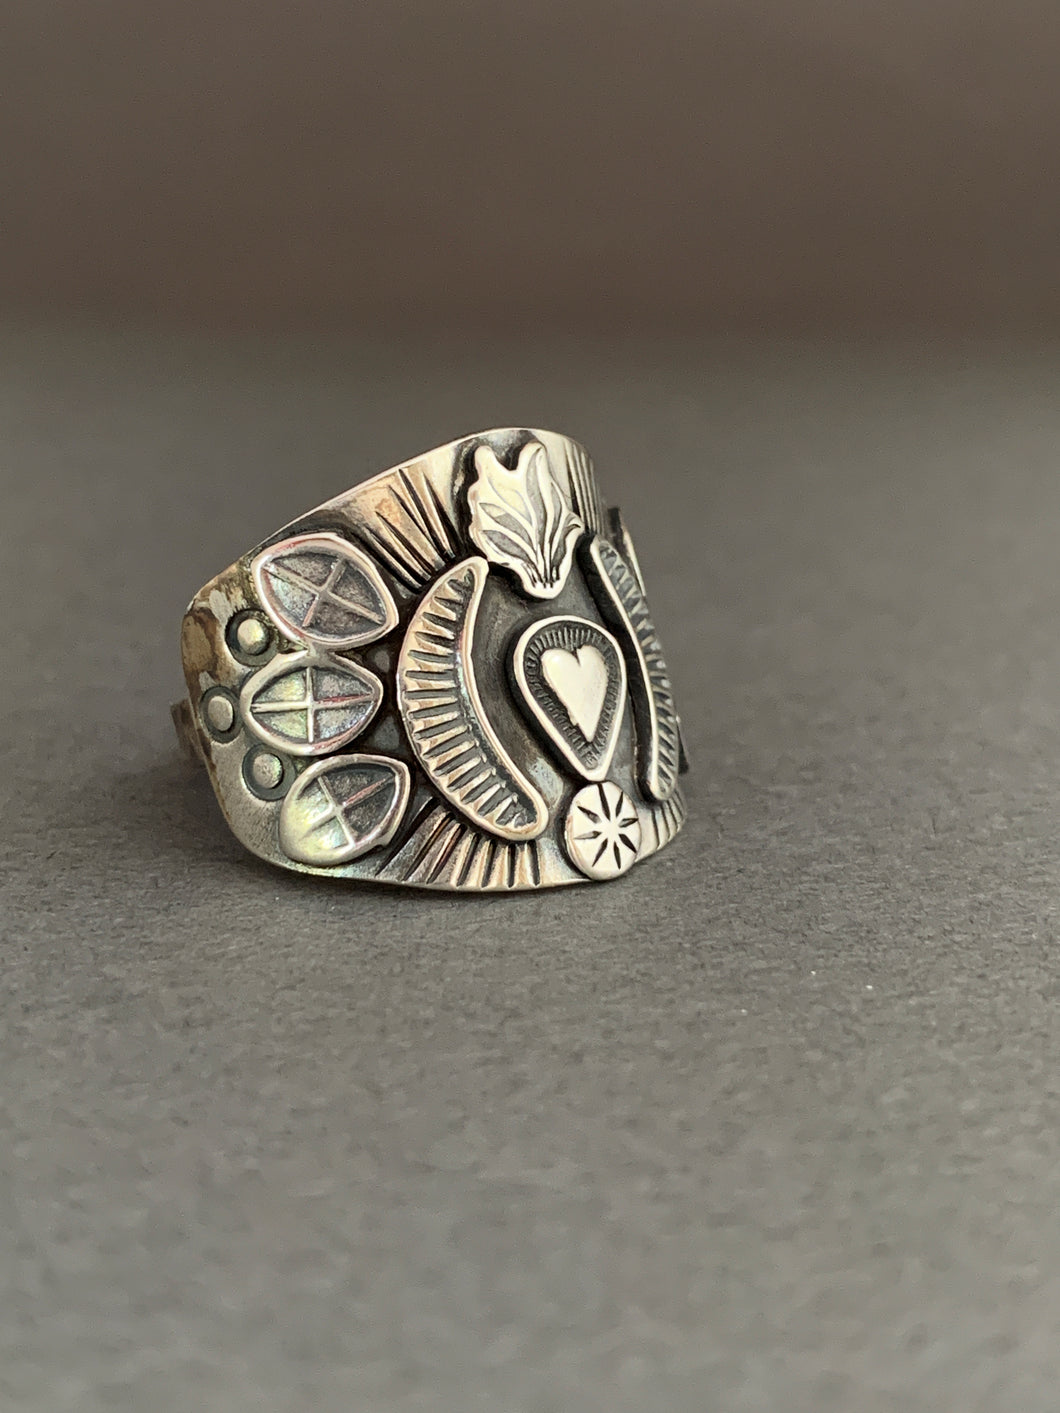 Medium Size 8.5 sacred heart shield ring